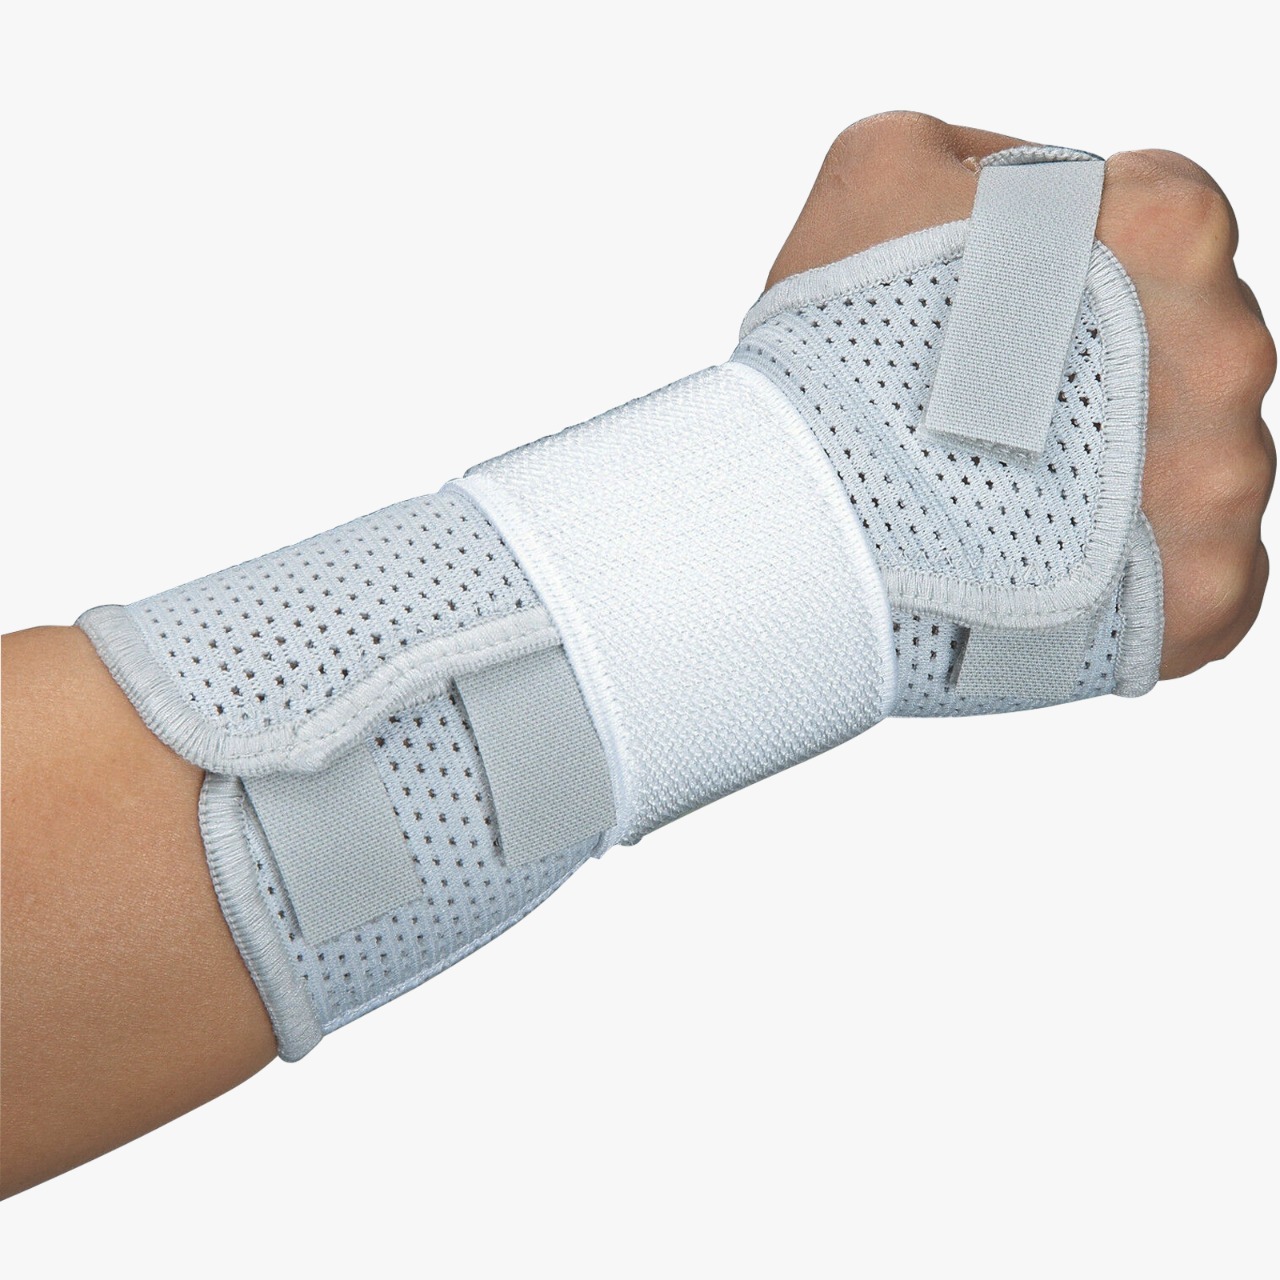 Extra Large Right Hand Breathable Wrist Support Brace Splint For Carpal Tunnel, Arthritis Sprain Strain